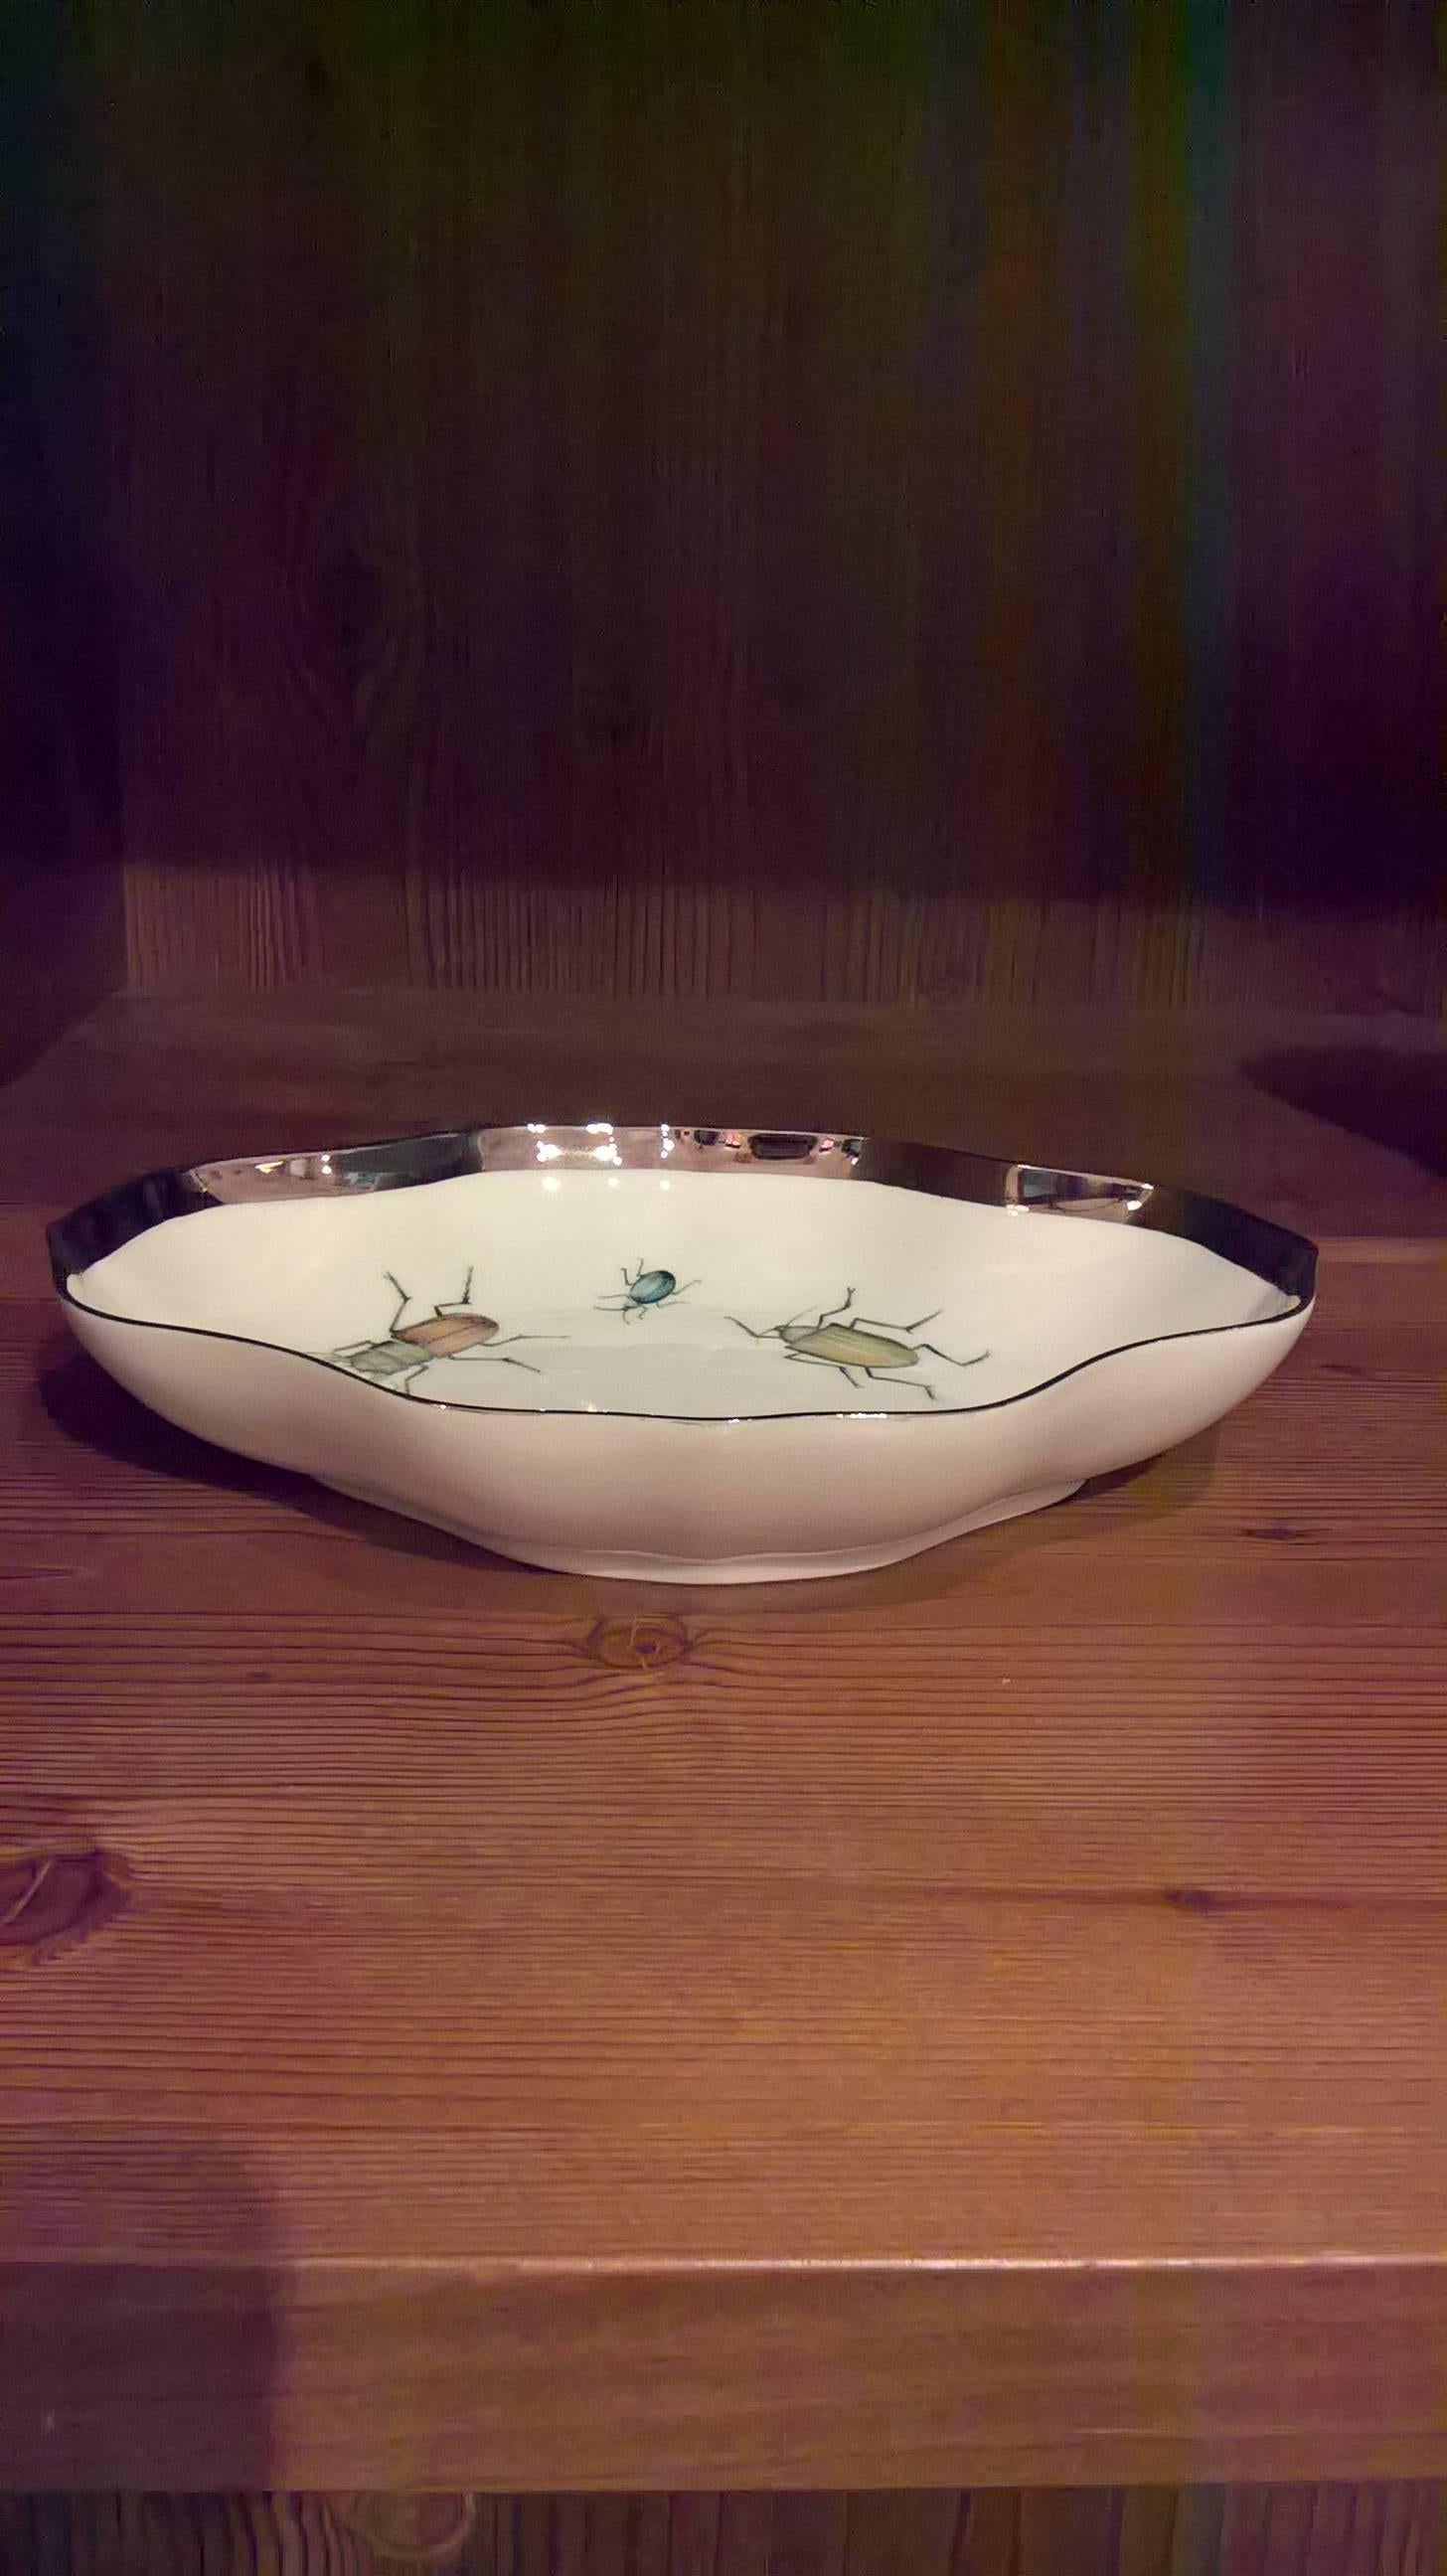  Modern German Porcelain Dish with Beetles by Sofina Porcelain Kitzbuehel For Sale 1